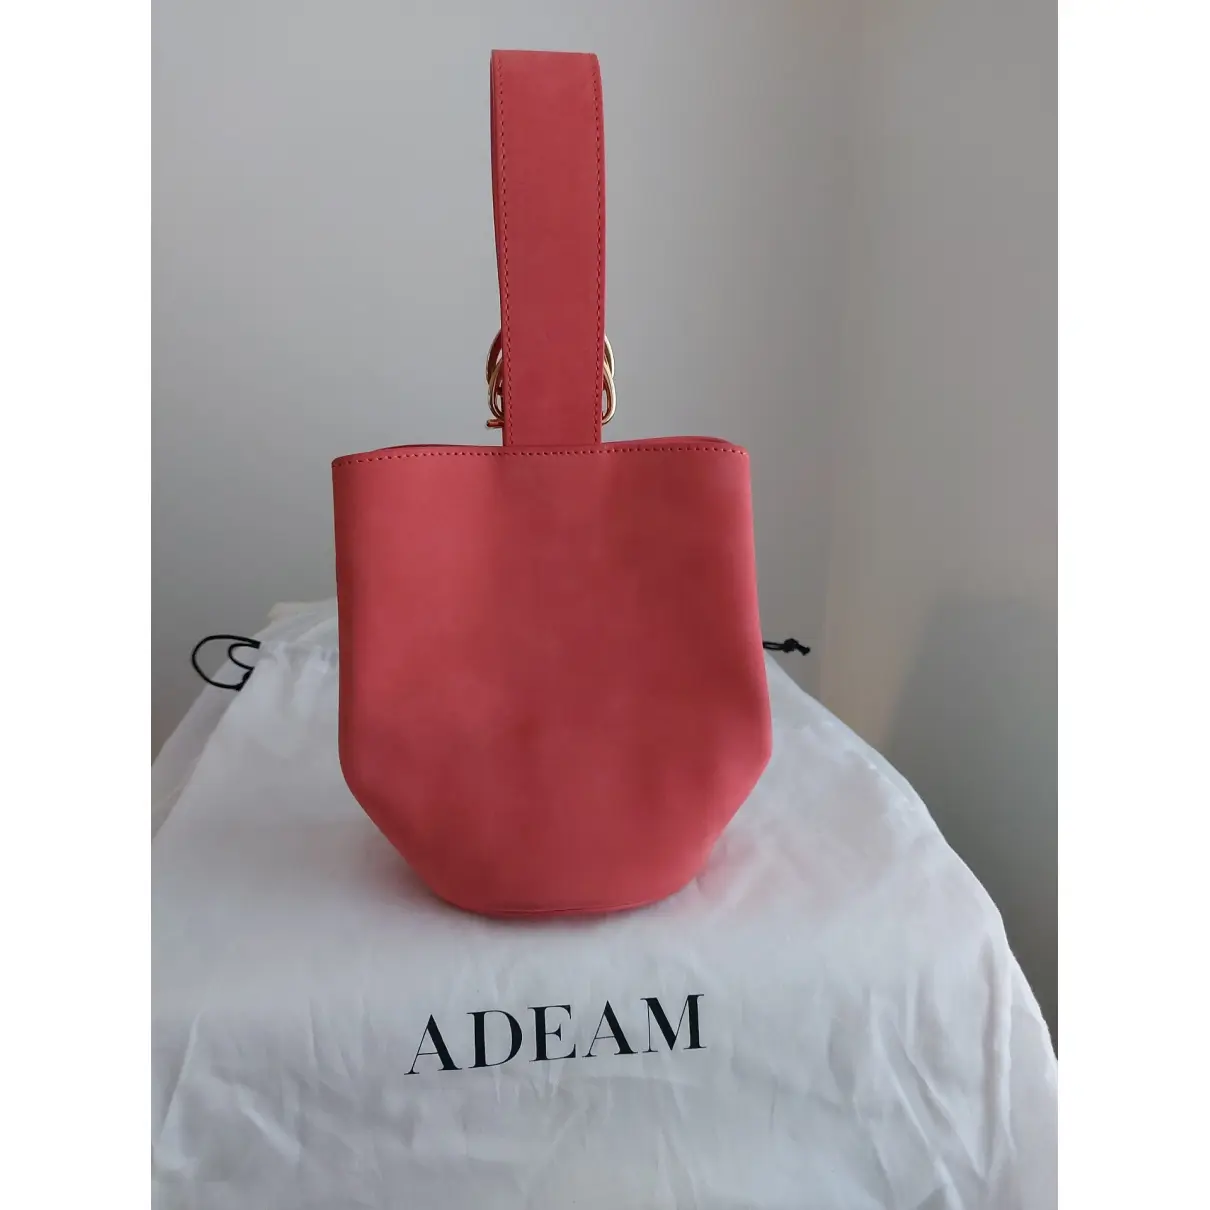 Buy Adeam Leather handbag online